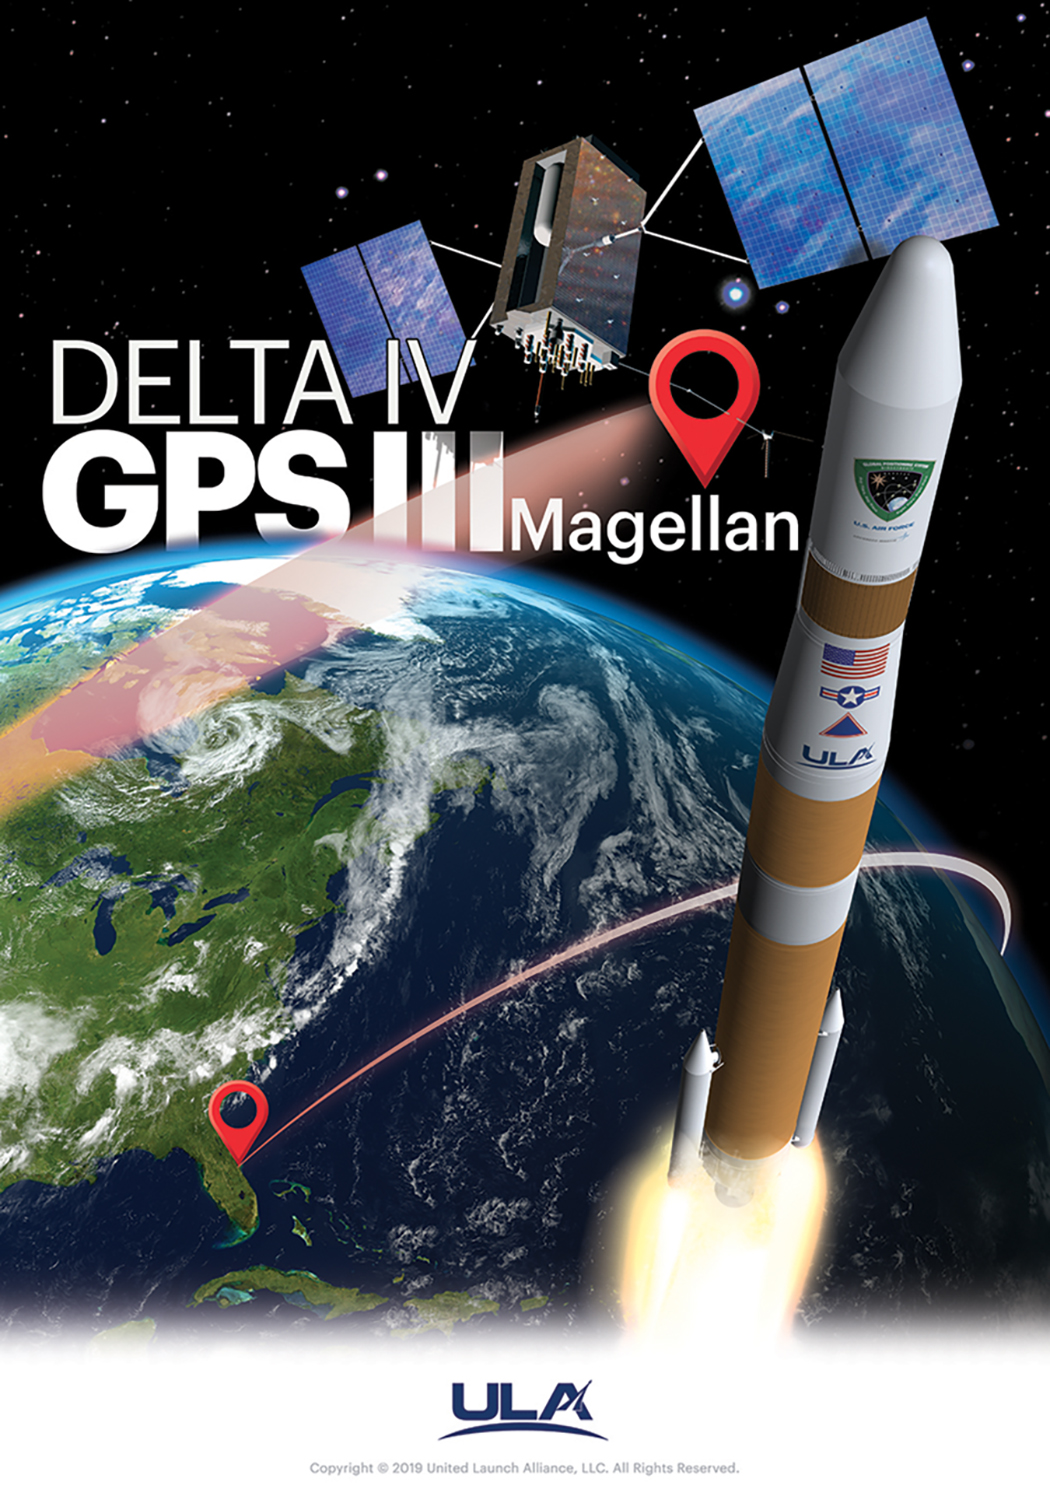 USAF ORIGINAL GPS II F-02 DELTA IV ULA TEAM DELTA SATELLITE LAUNCH SPACE PATCH 